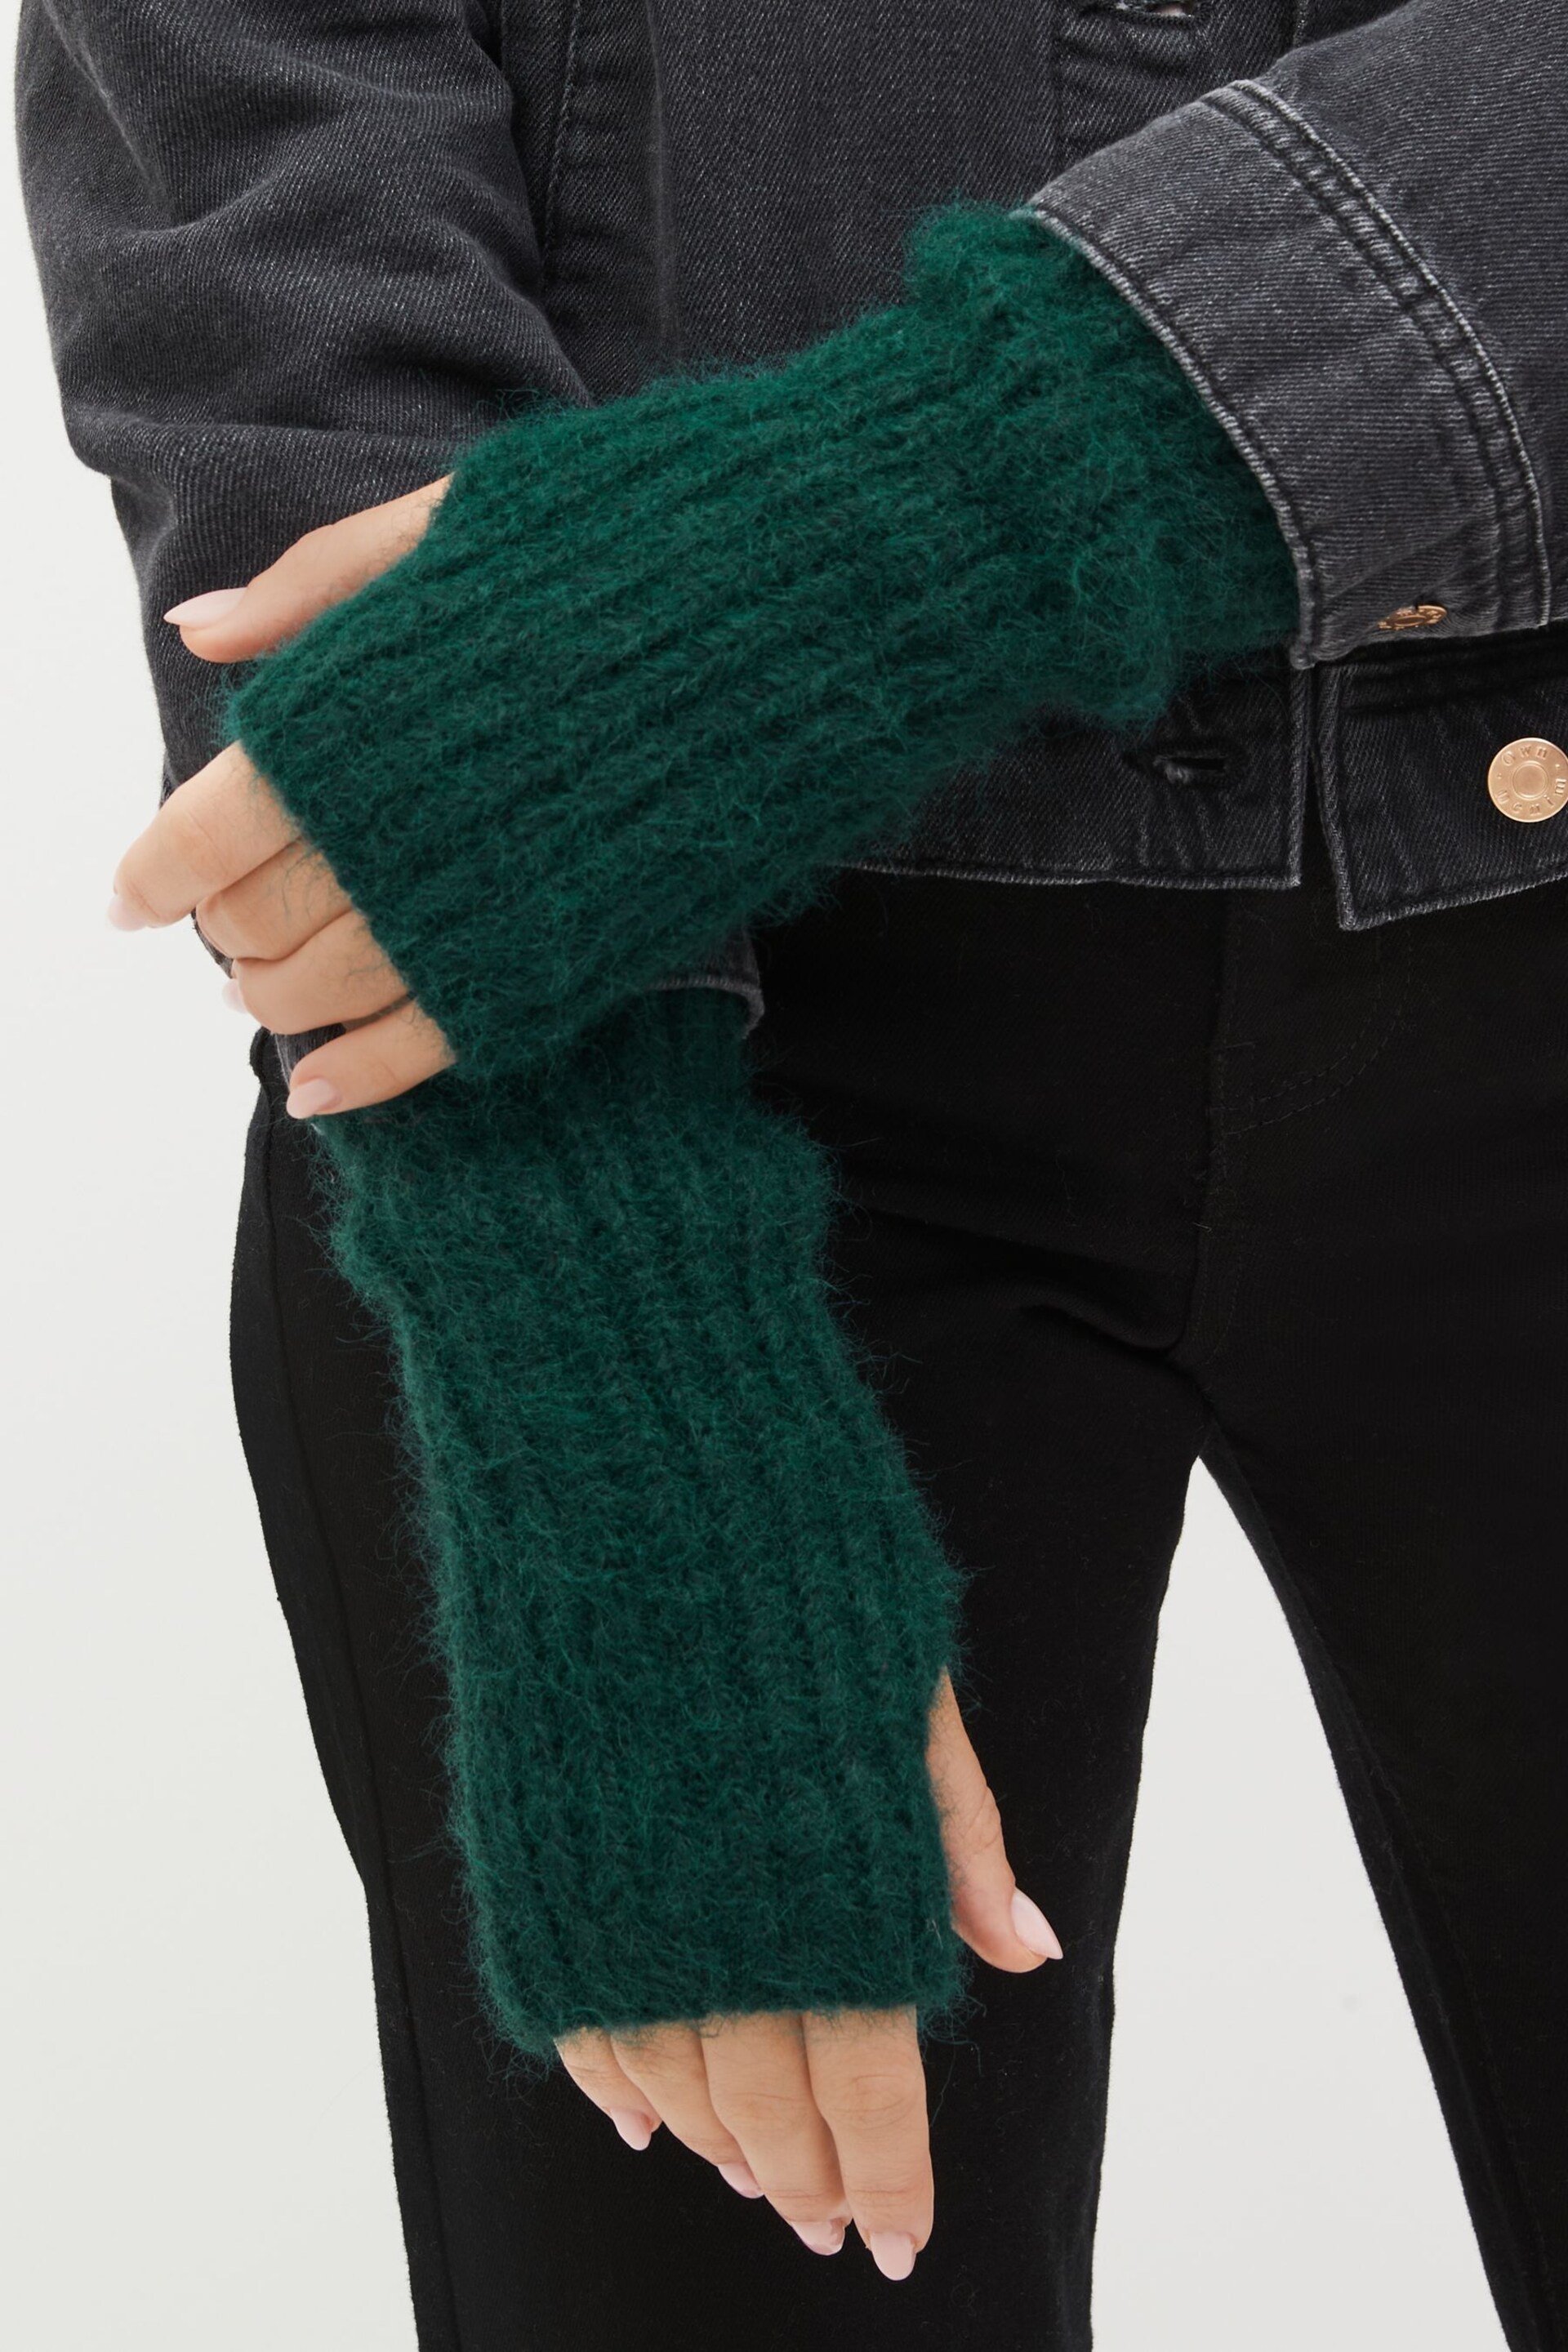 Green Knit Longline Handwarmers - Image 2 of 3